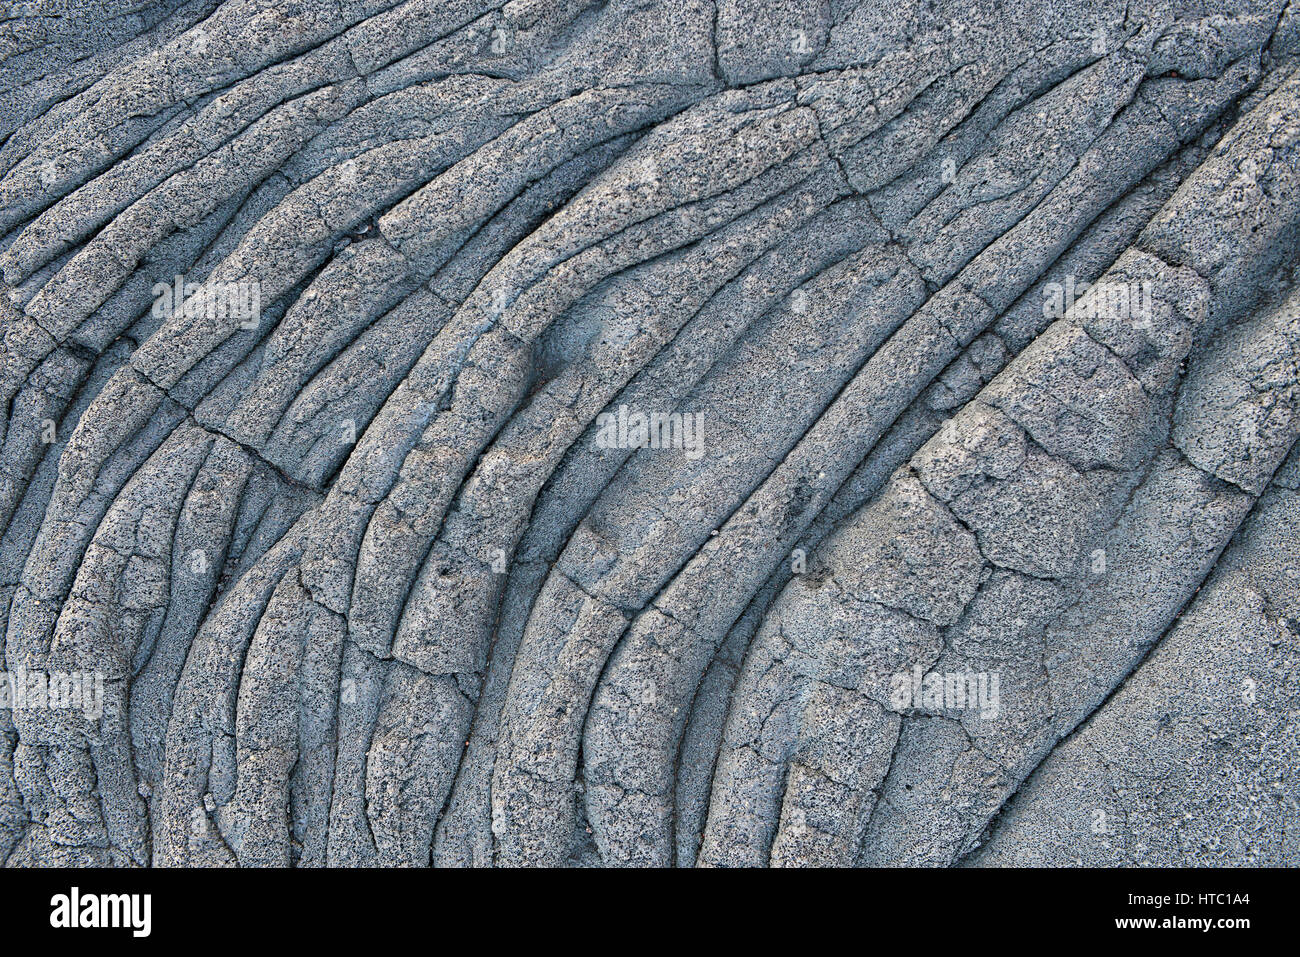 A freddo di lava vulcanica rock texture di massa Foto Stock